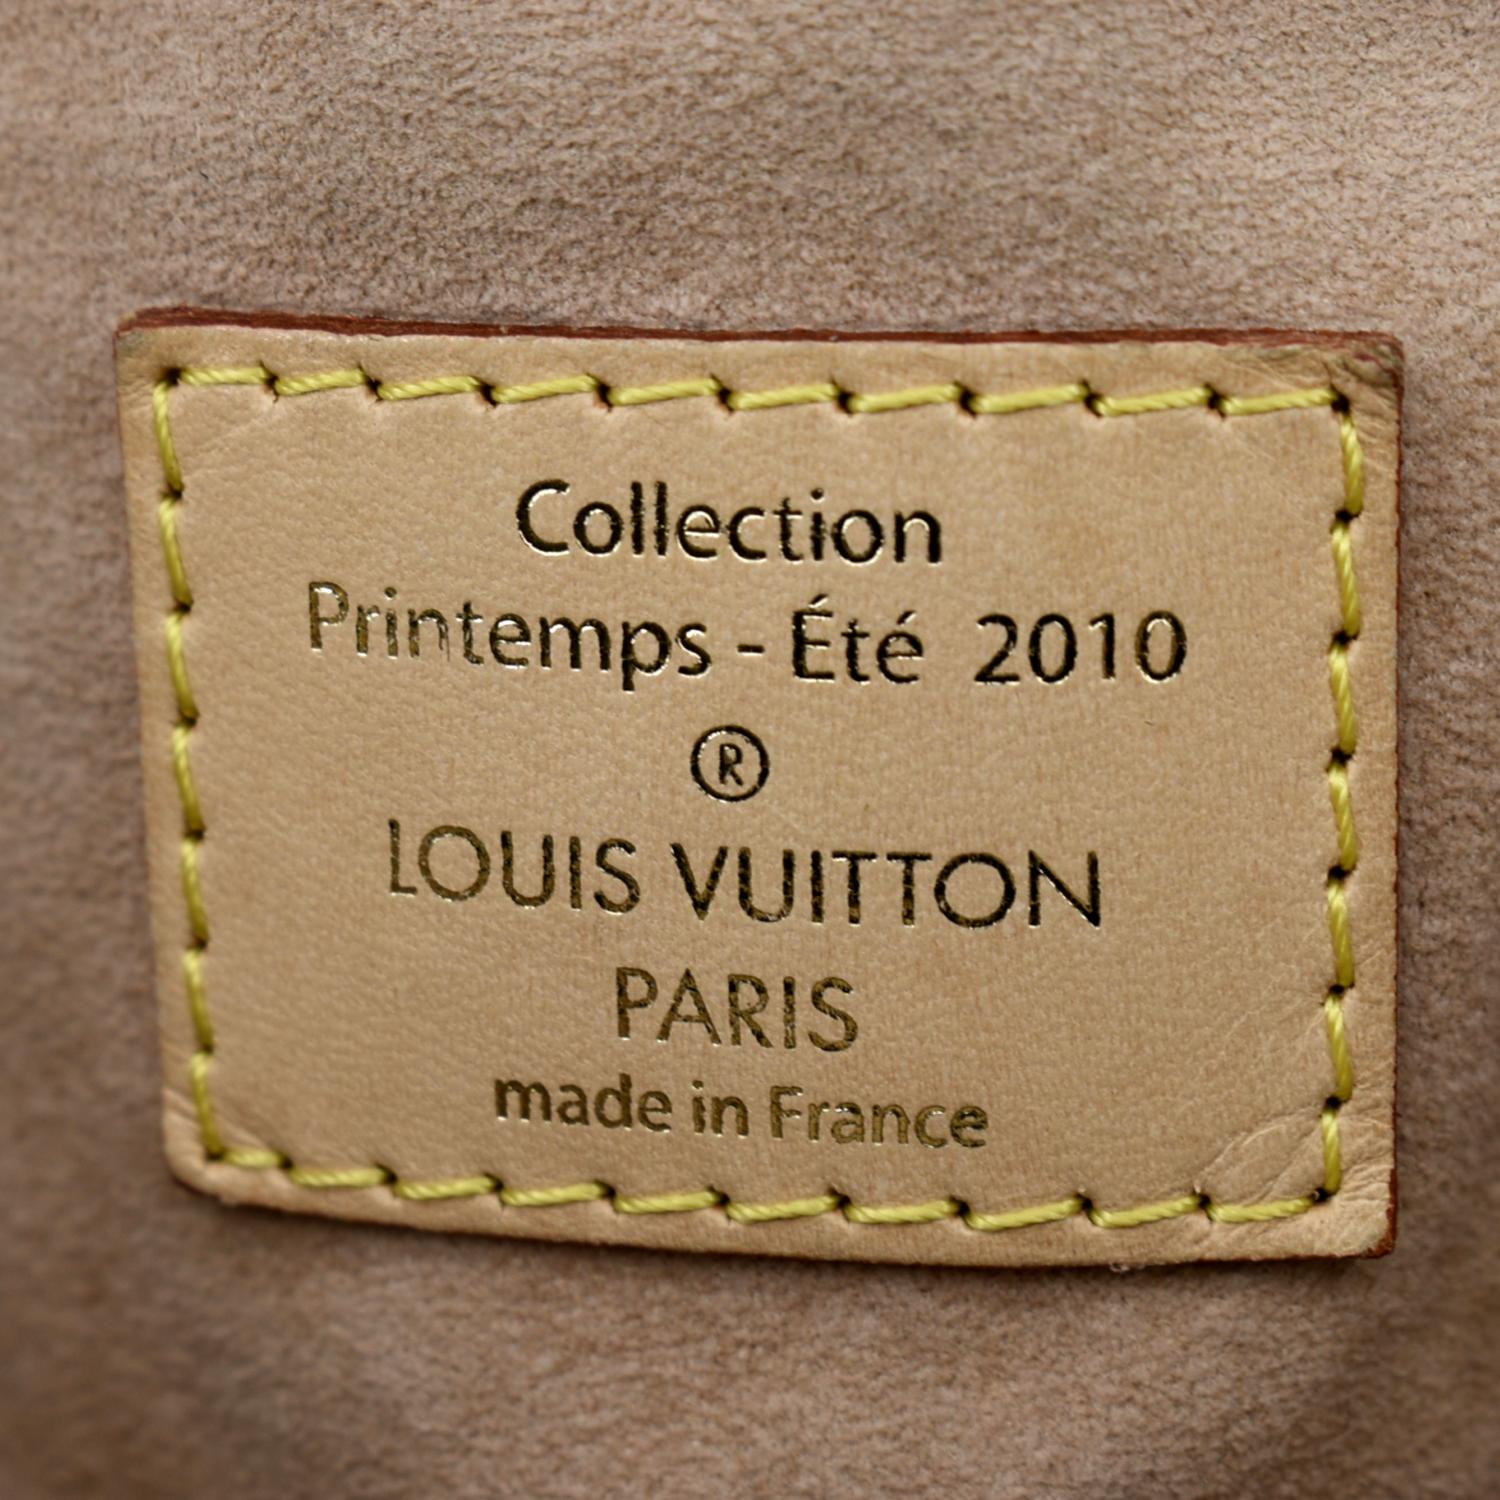 Louis Vuitton Collection Printemps Ete 2010